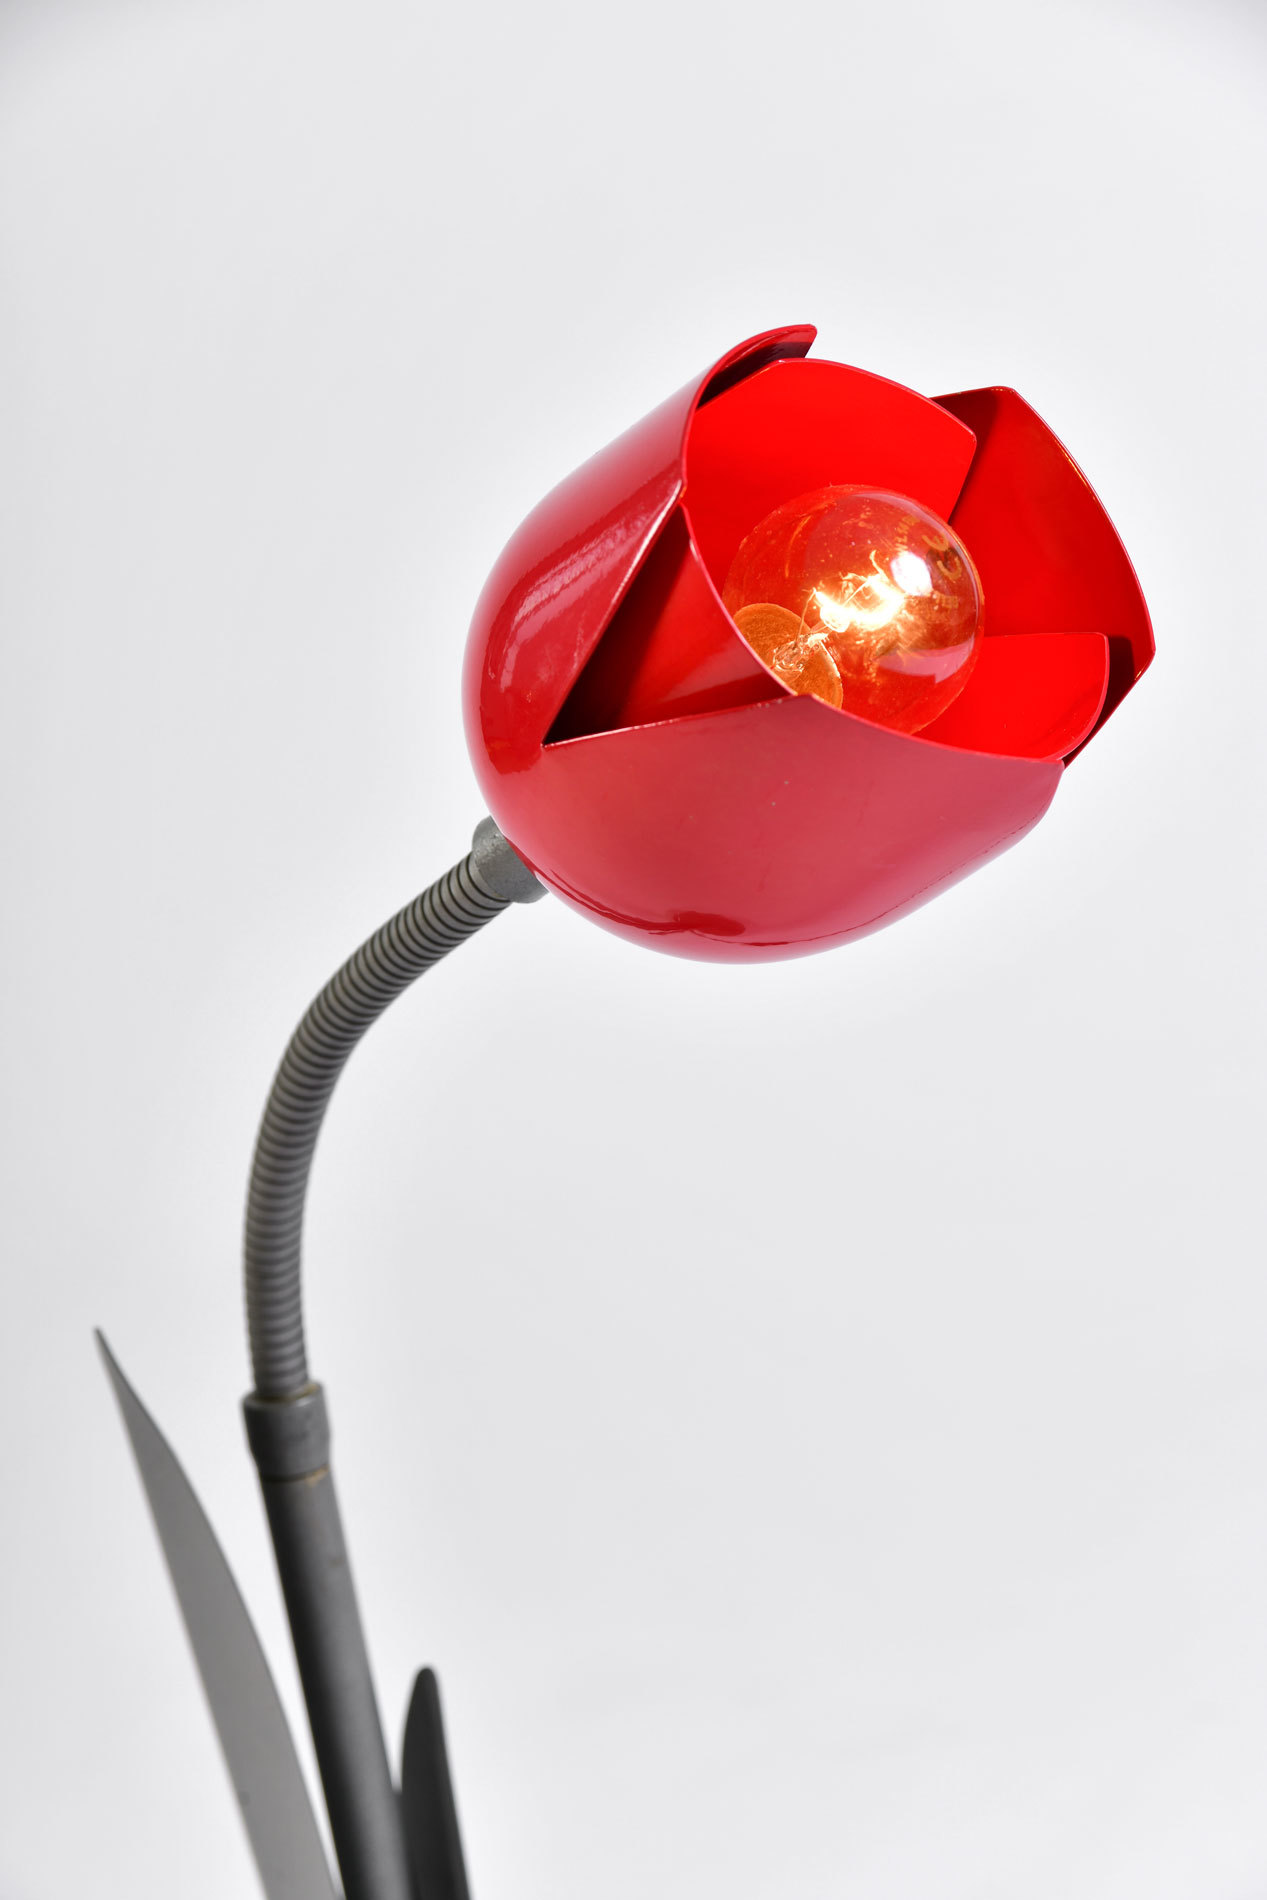 Peter Bliss Tulip Lamp 03